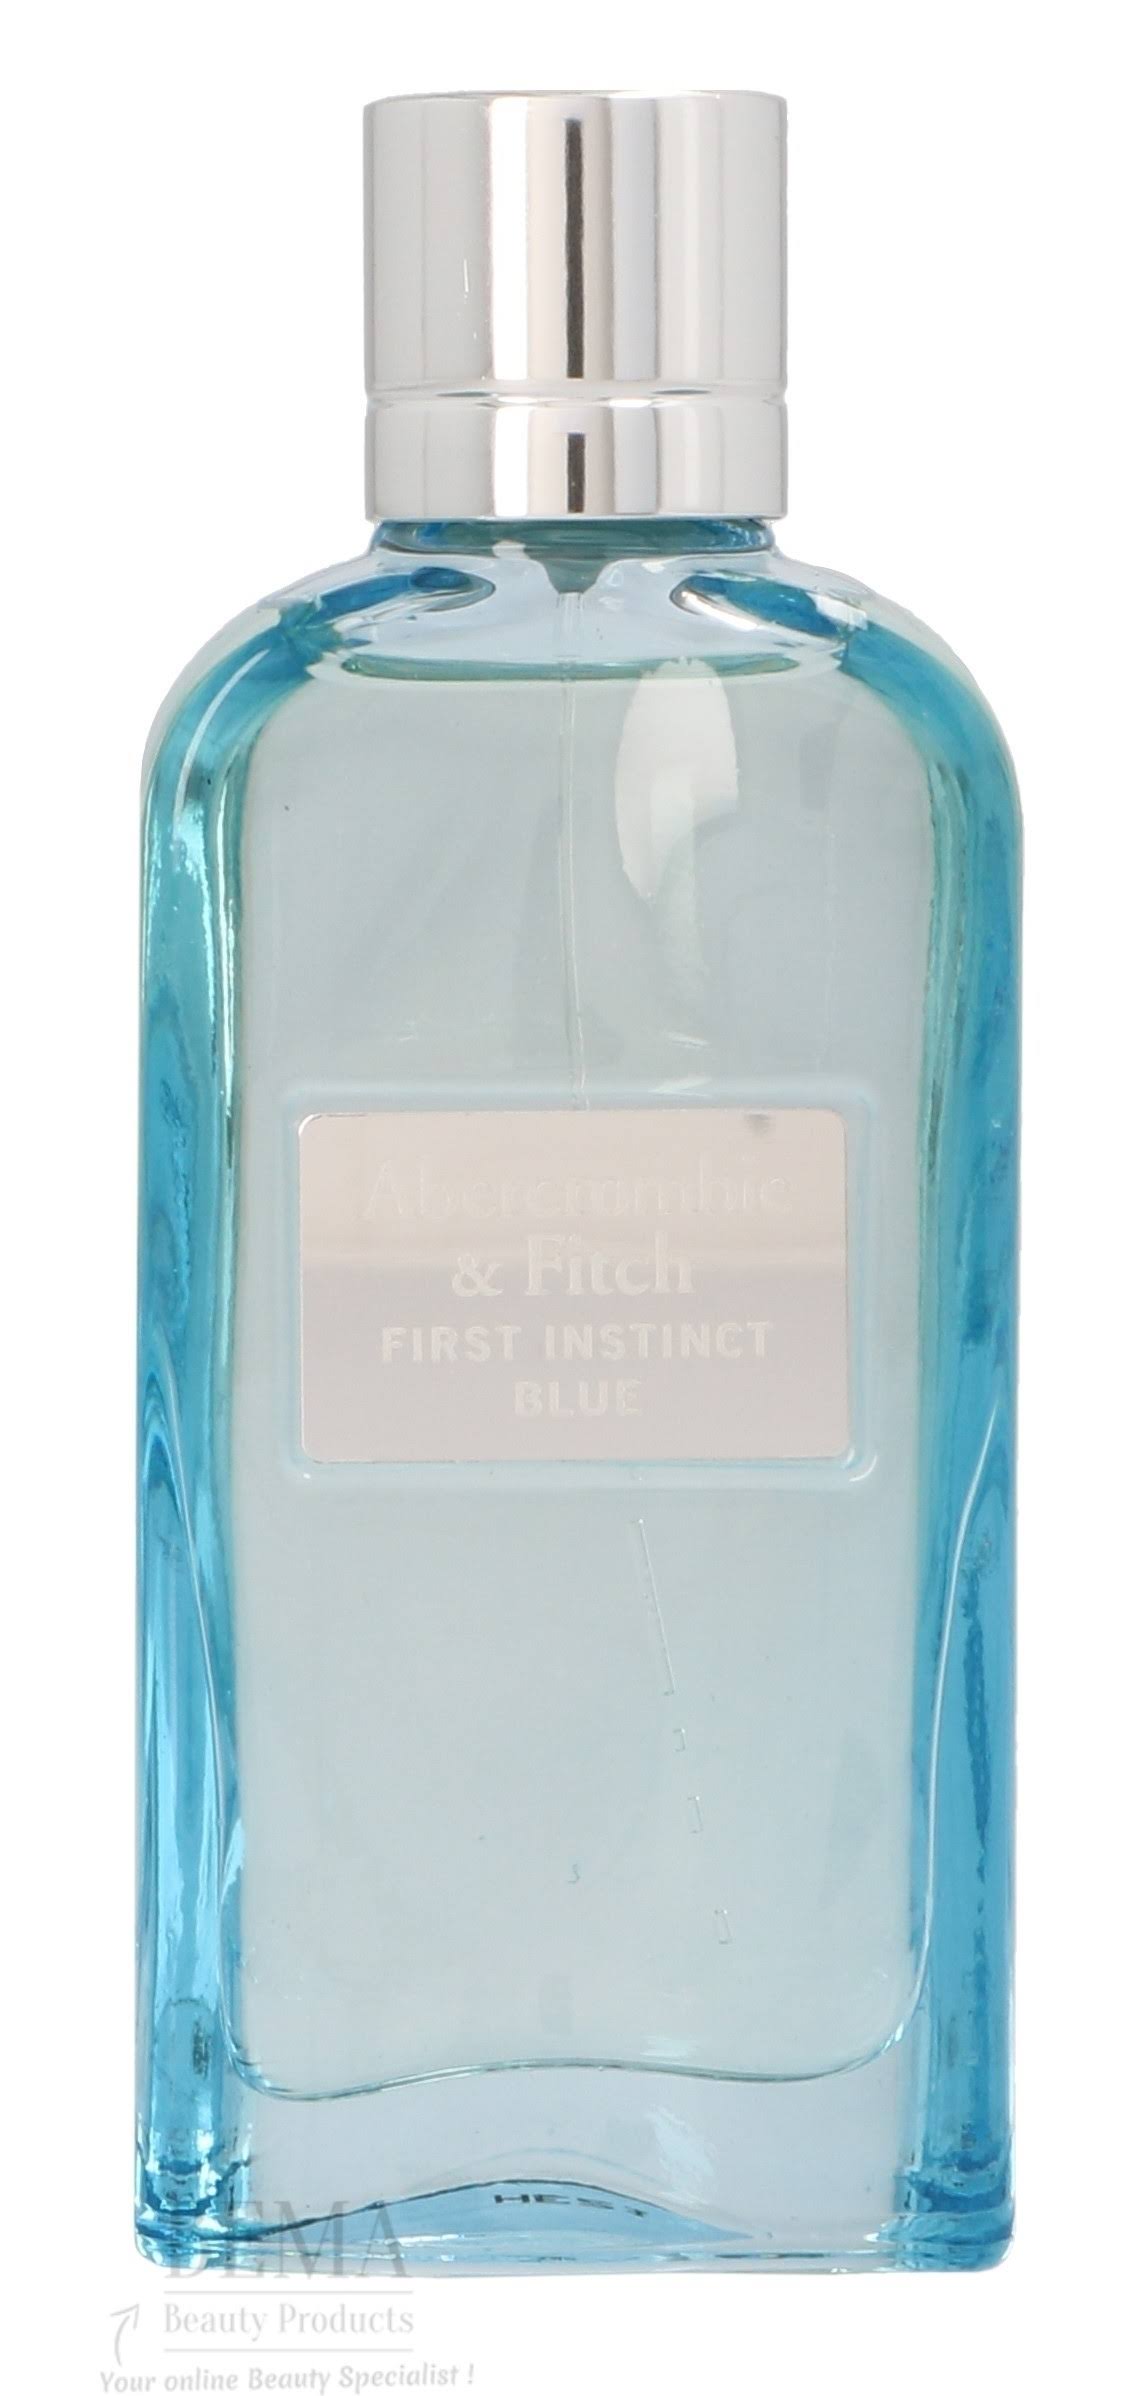 Abercrombie & Fitch First Instinct Blue Eau De Parfum Spray 50ml